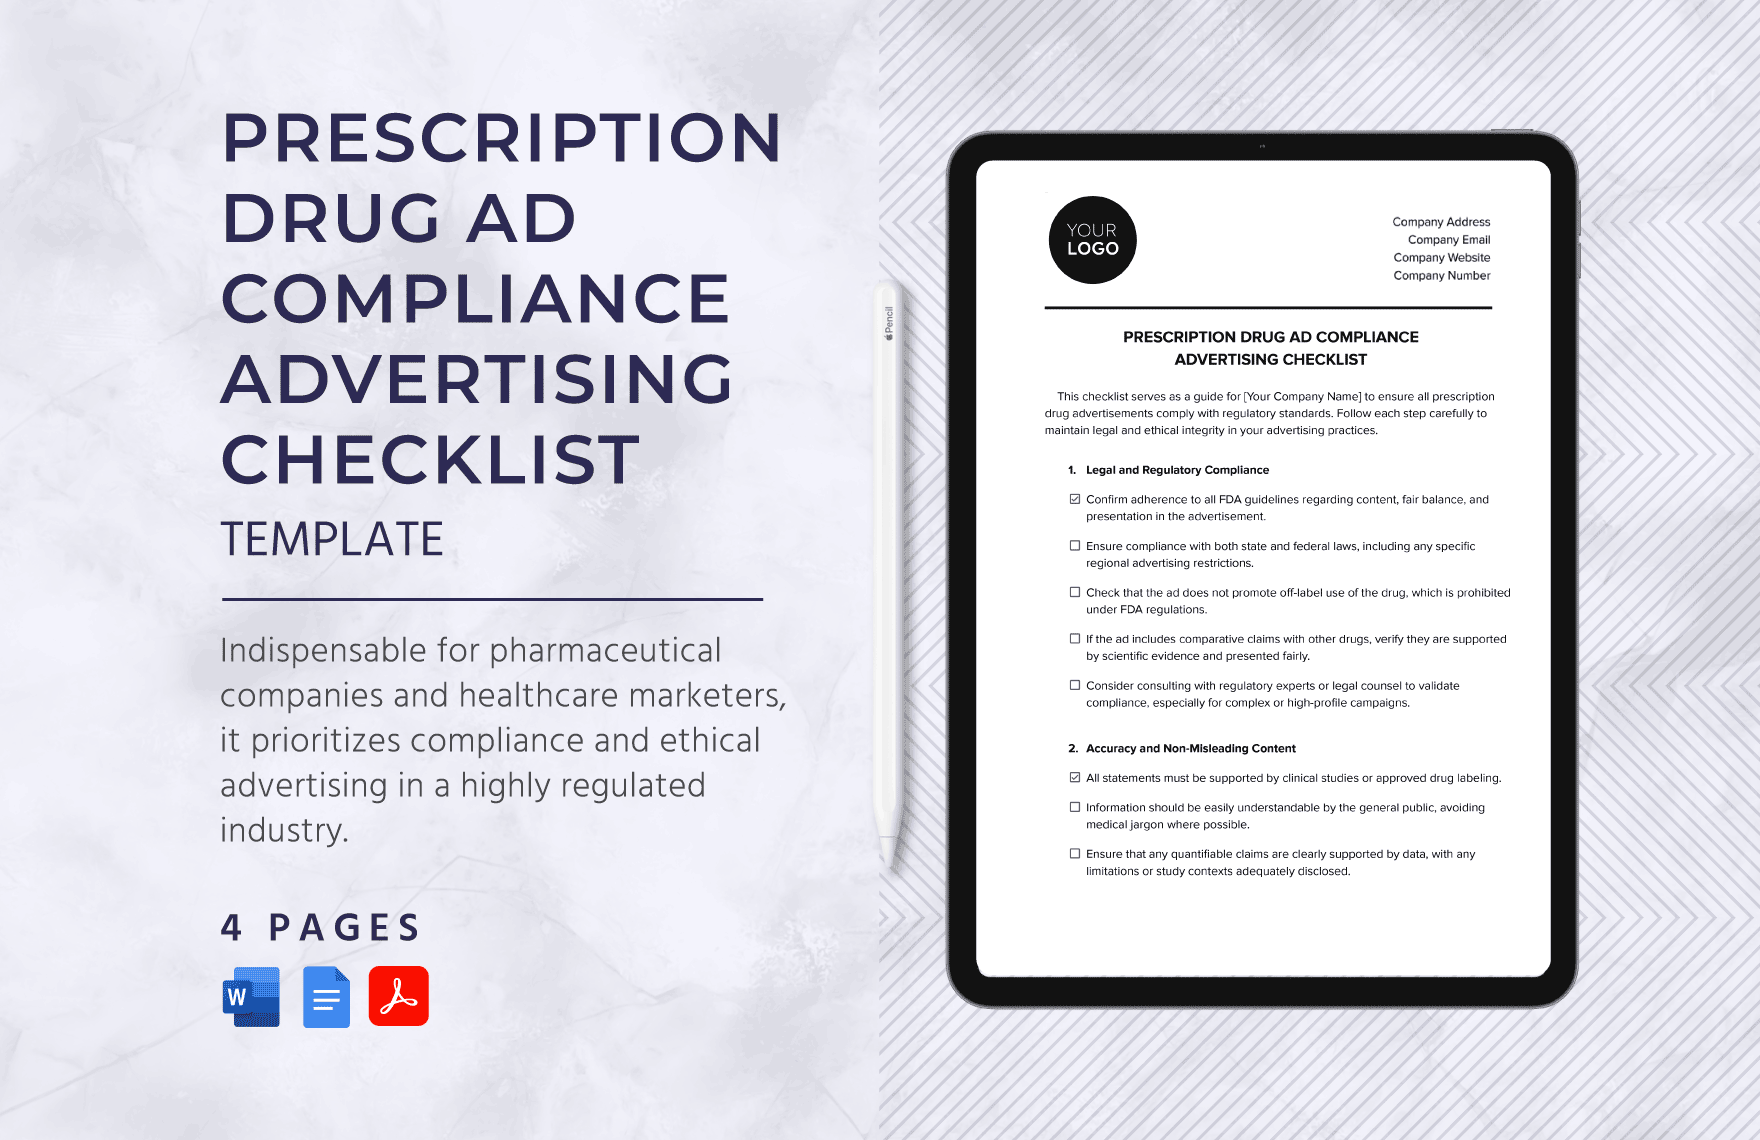 Prescription Drug Ad Compliance Advertising Checklist Template in Word, Google Docs, PDF